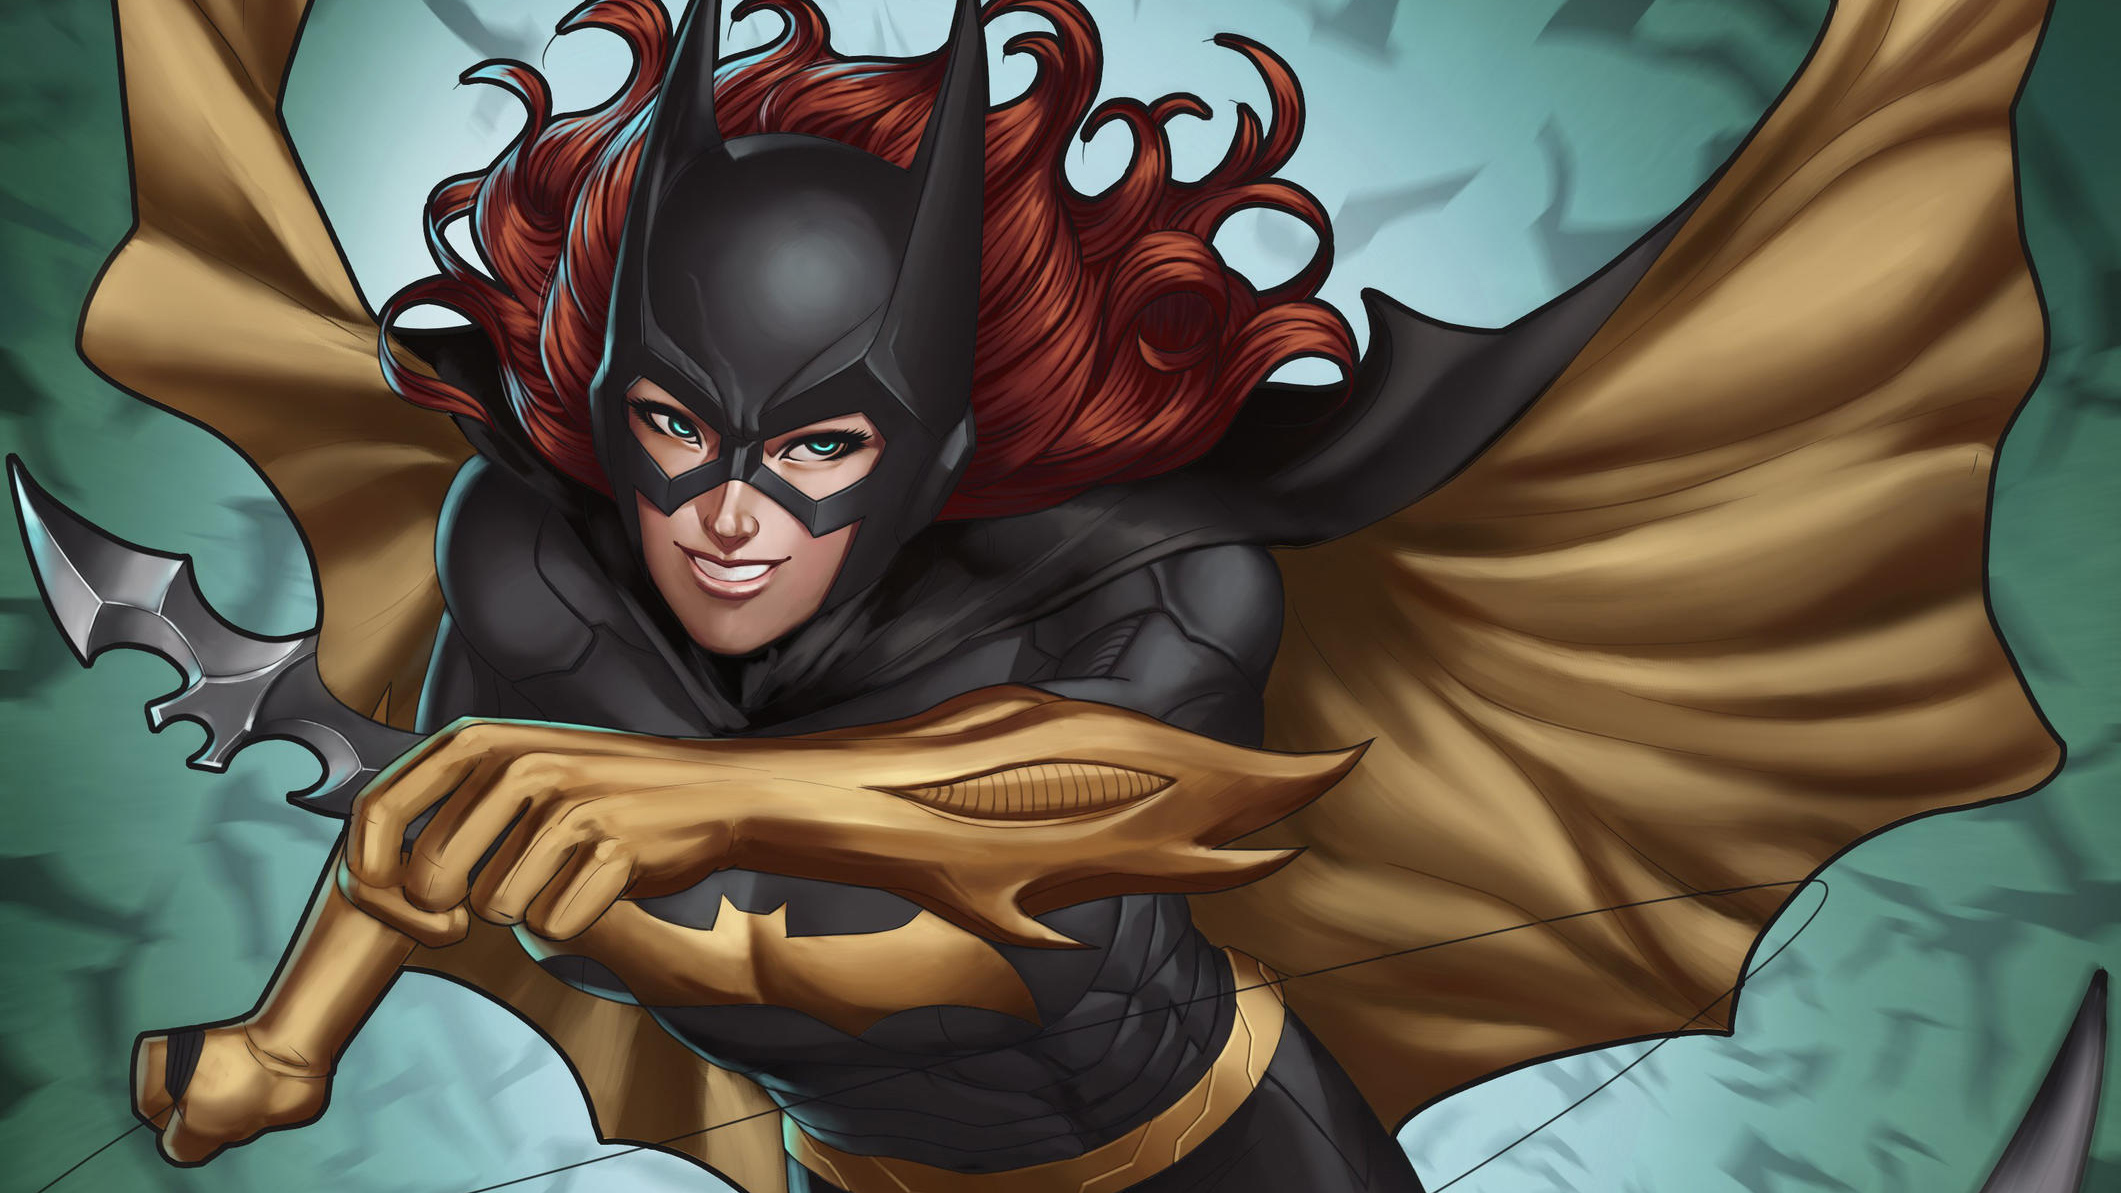 Descarga gratis la imagen Historietas, The Batman, Dc Comics, Batgirl en el escritorio de tu PC